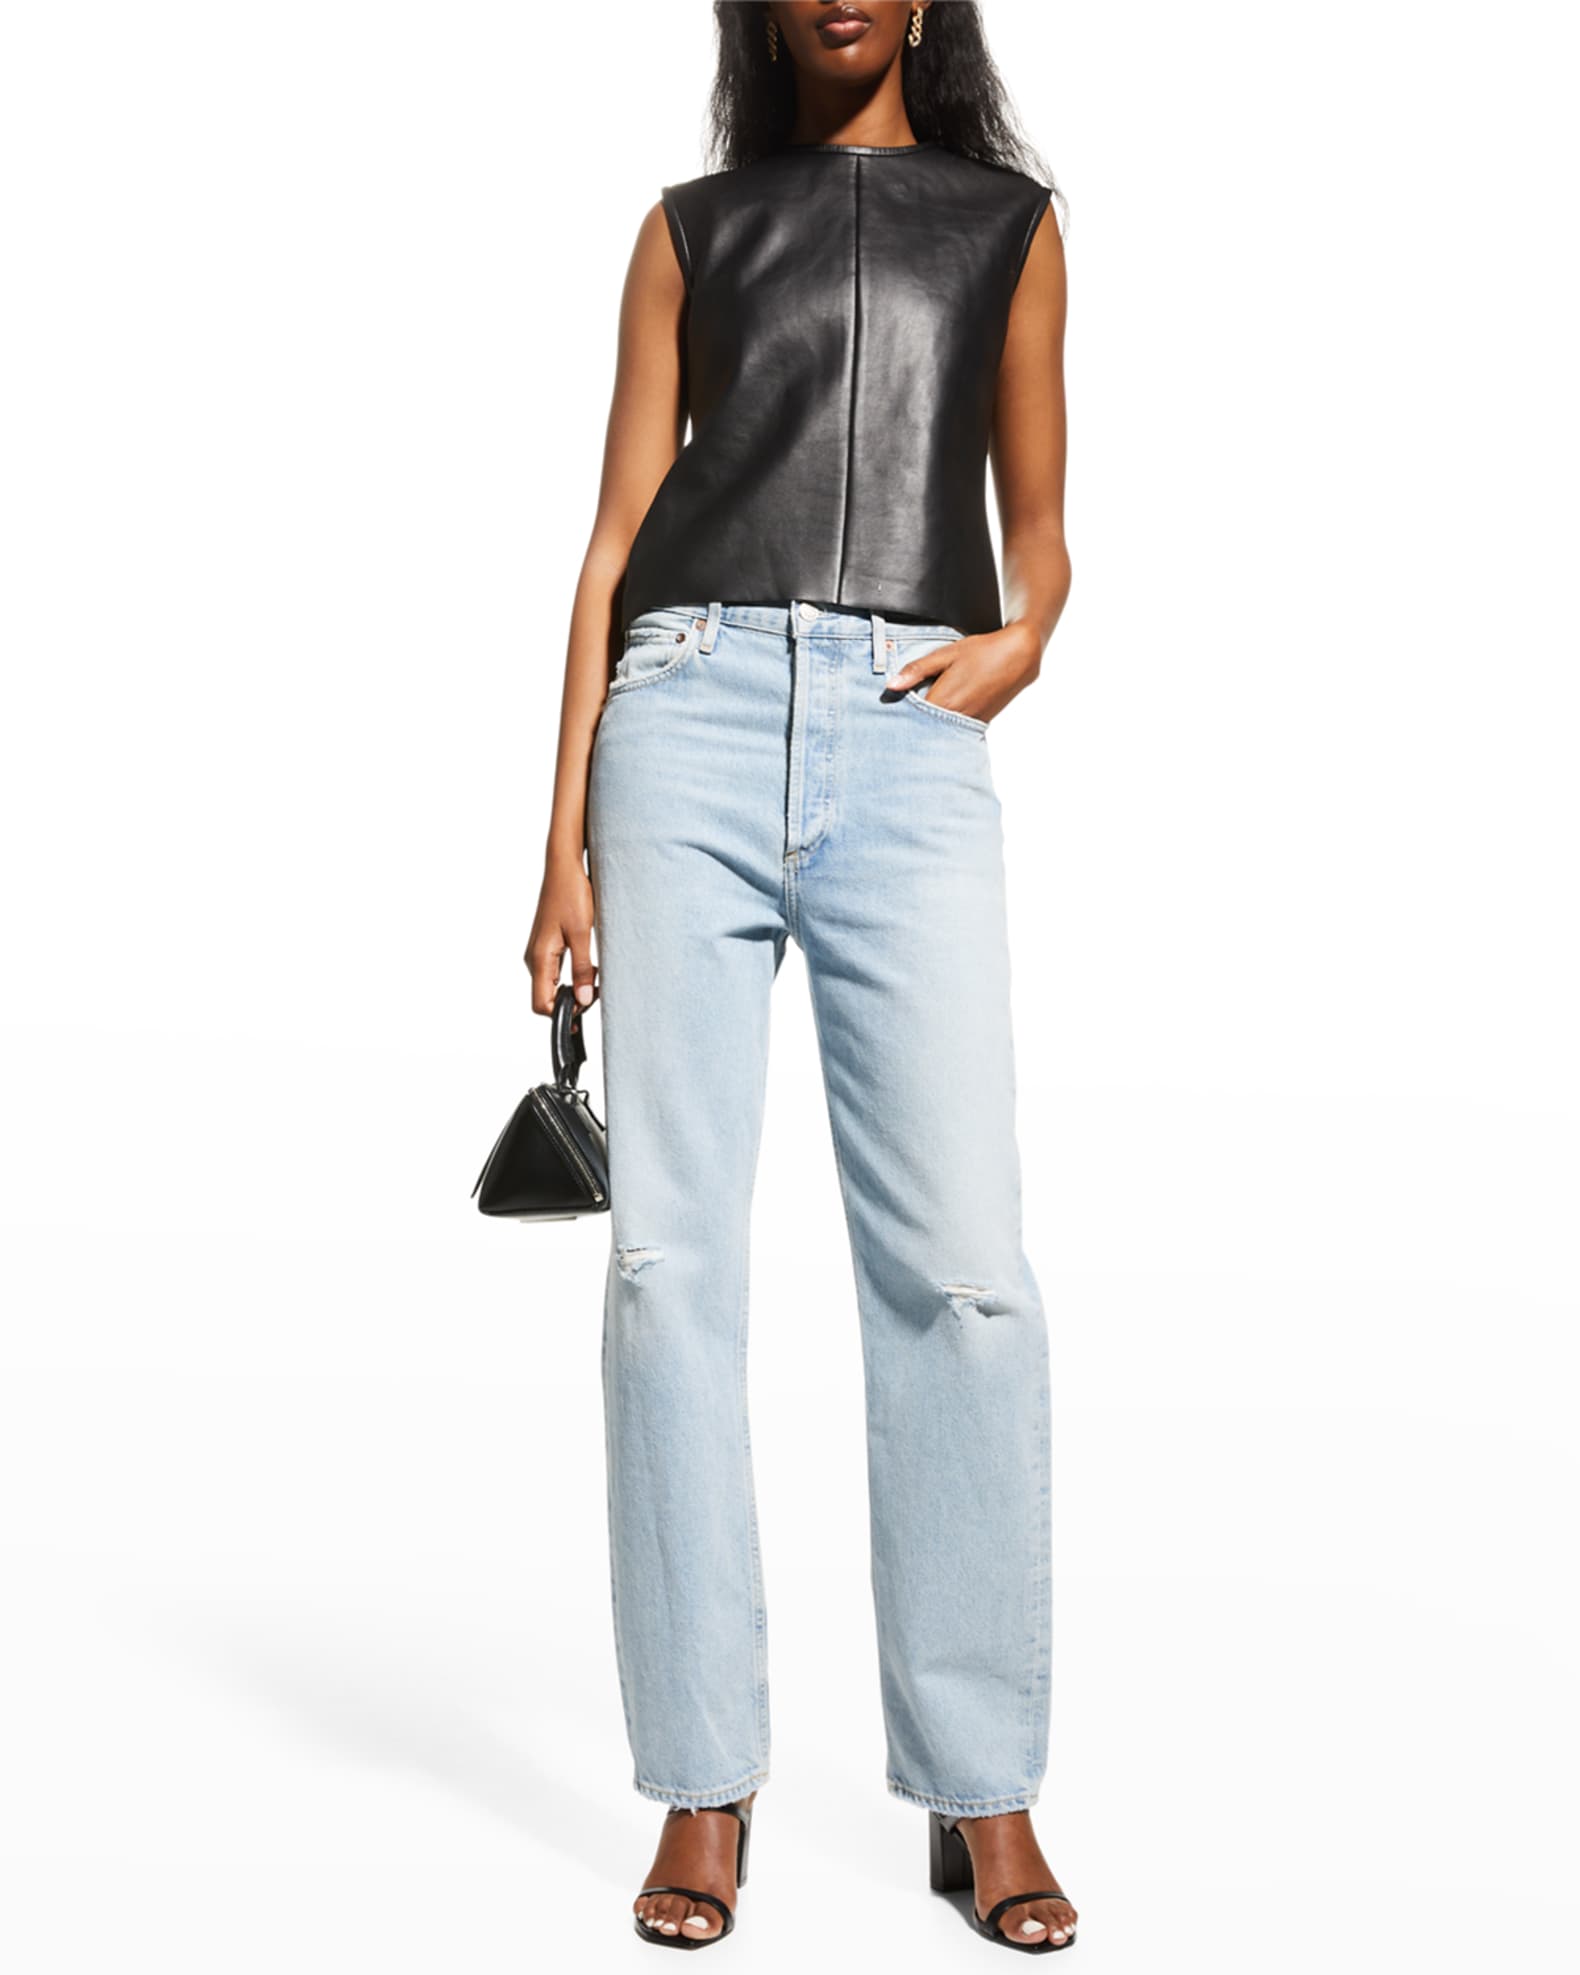 LaMarque Sofia Sleeveless Leather Top | Neiman Marcus